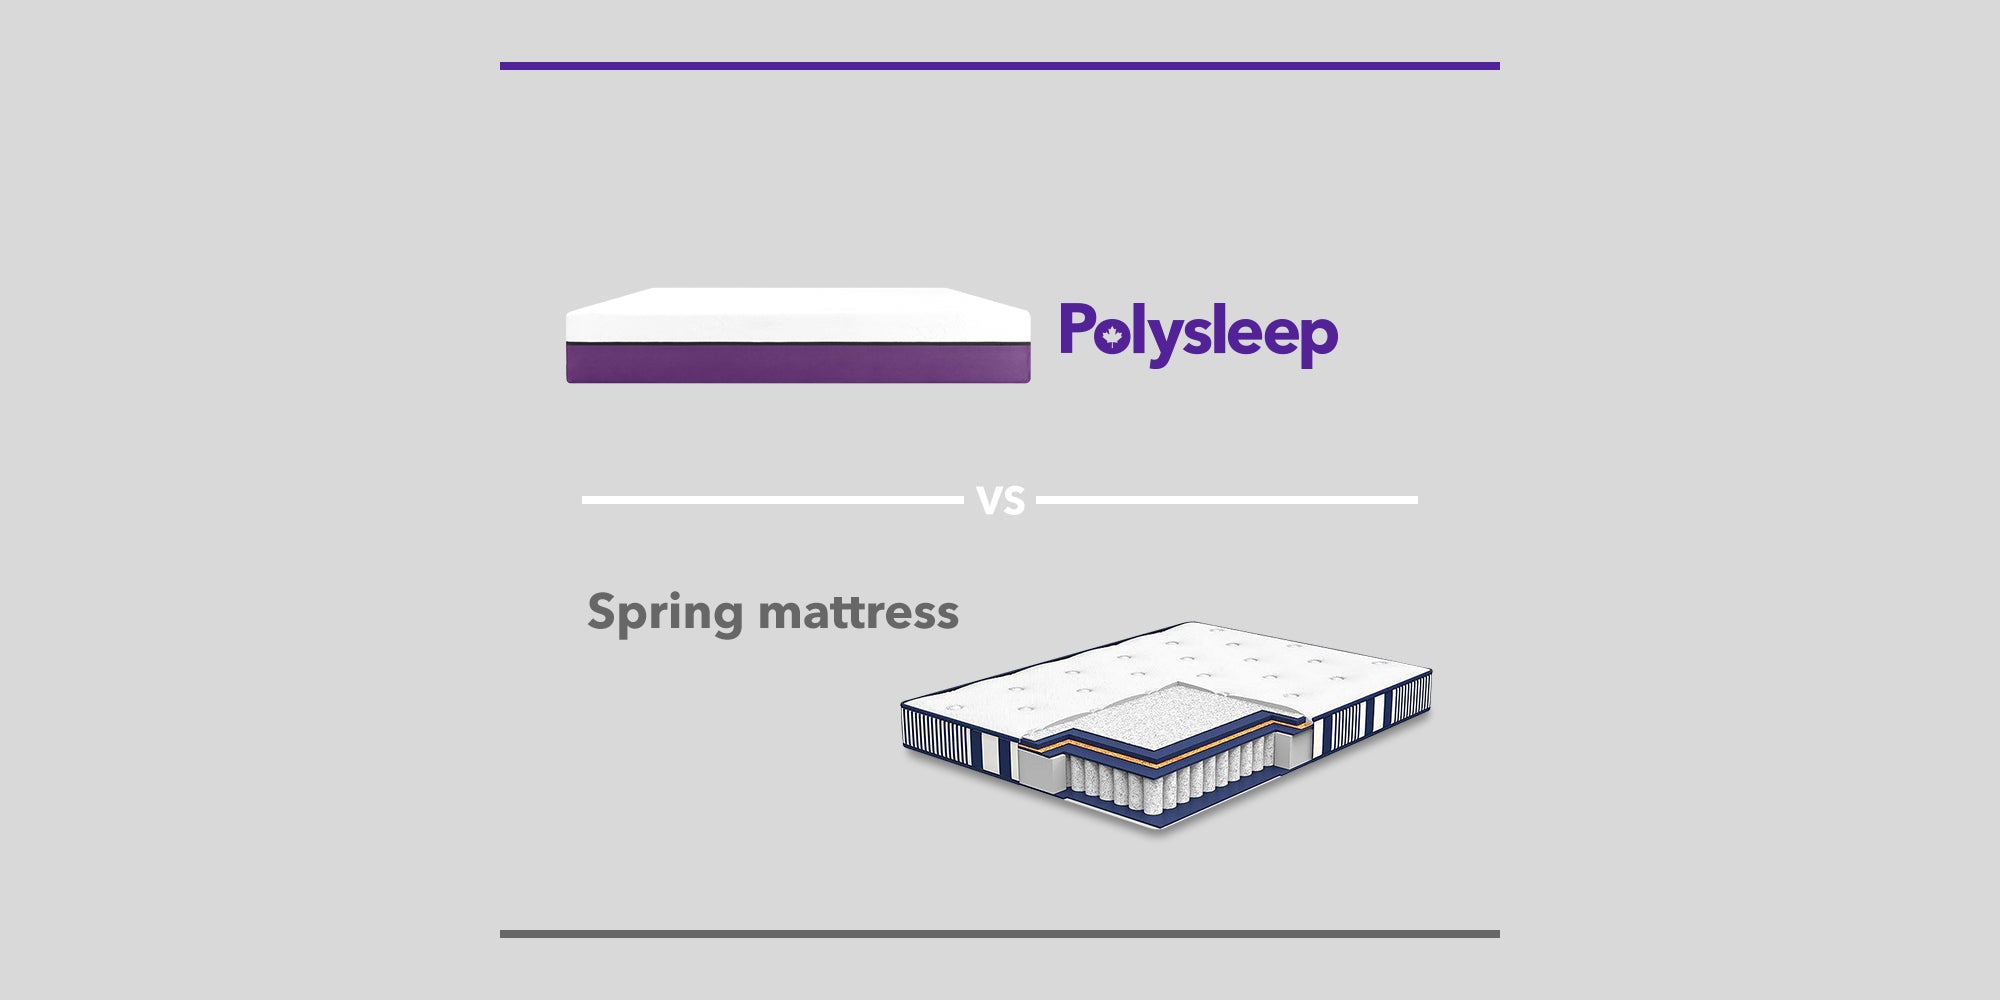 Illustration of a spring mattress and a Polysleep mattress